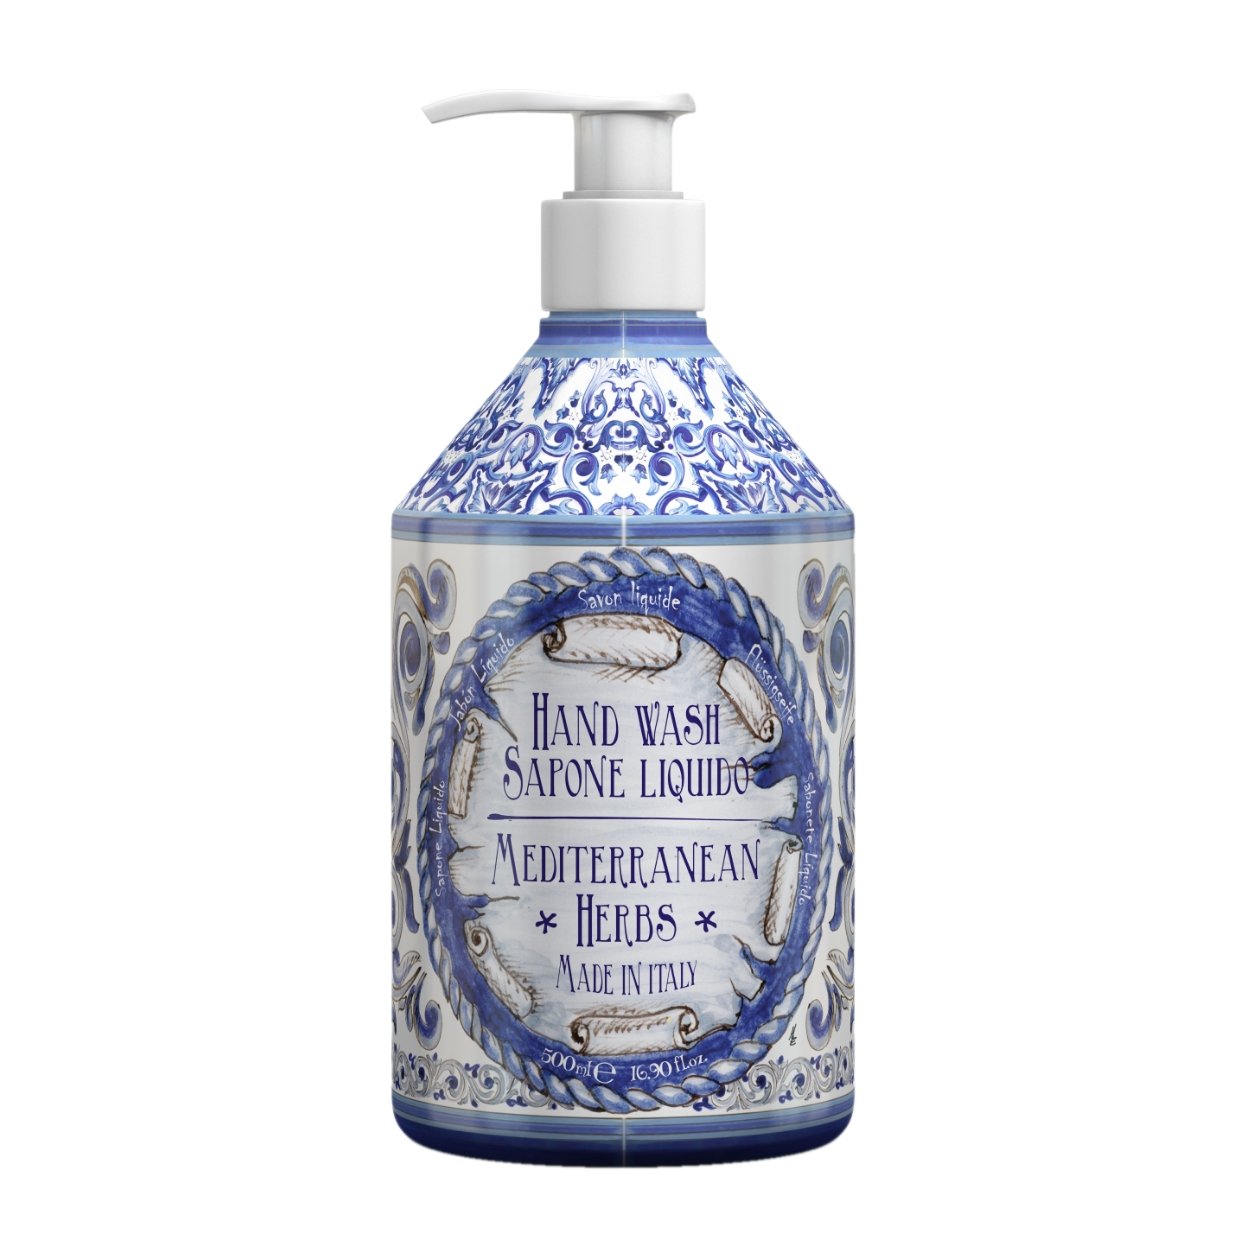 Le Maioliche | Mediterranean Herbs Luxury Liquid Hand Soap 500ml - |VESIMI Design| Luxury and Rustic bathrooms online